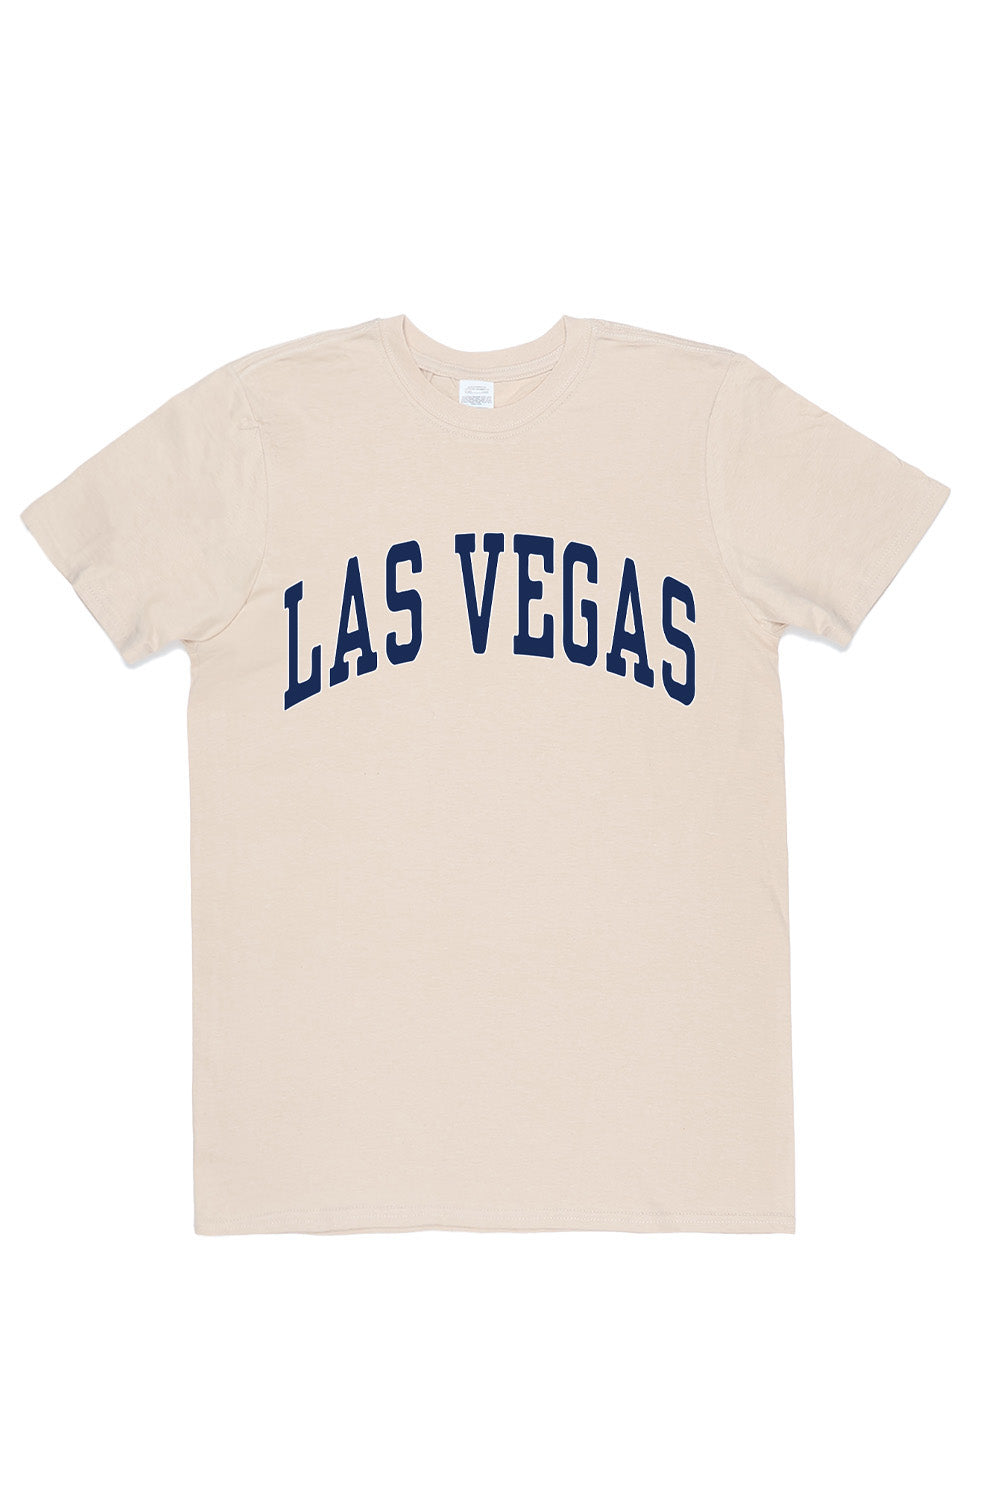 Las Vegas T-Shirt in Sand (Custom Packs)